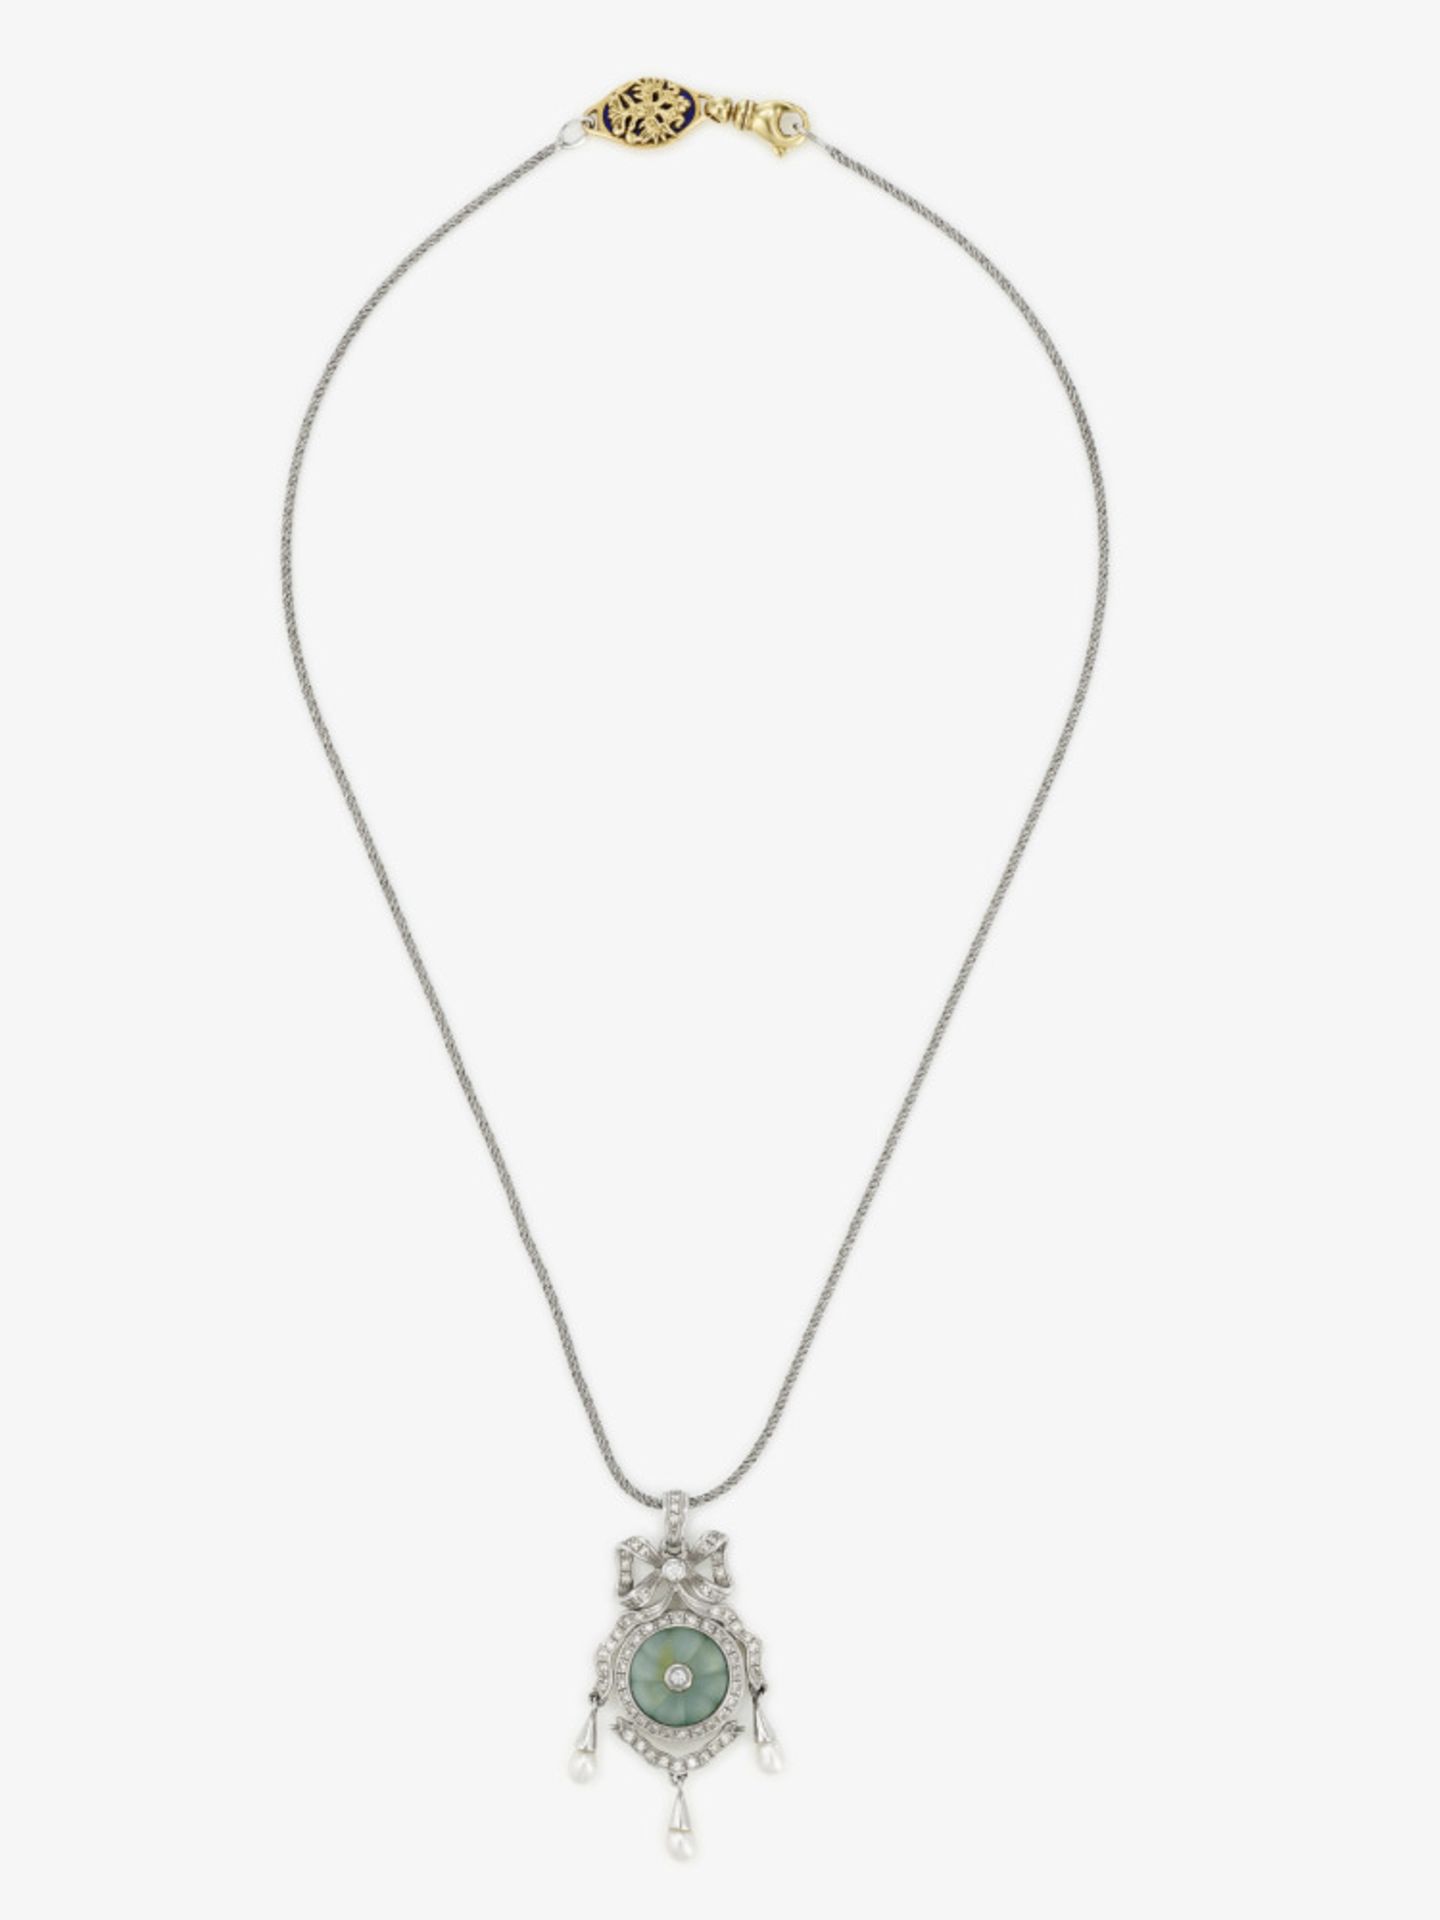 A pendant with brilliant-cut diamonds and cultured pearls - Pforzheim, circa 1998, FABERGÉ VICTOR MA - Image 3 of 3